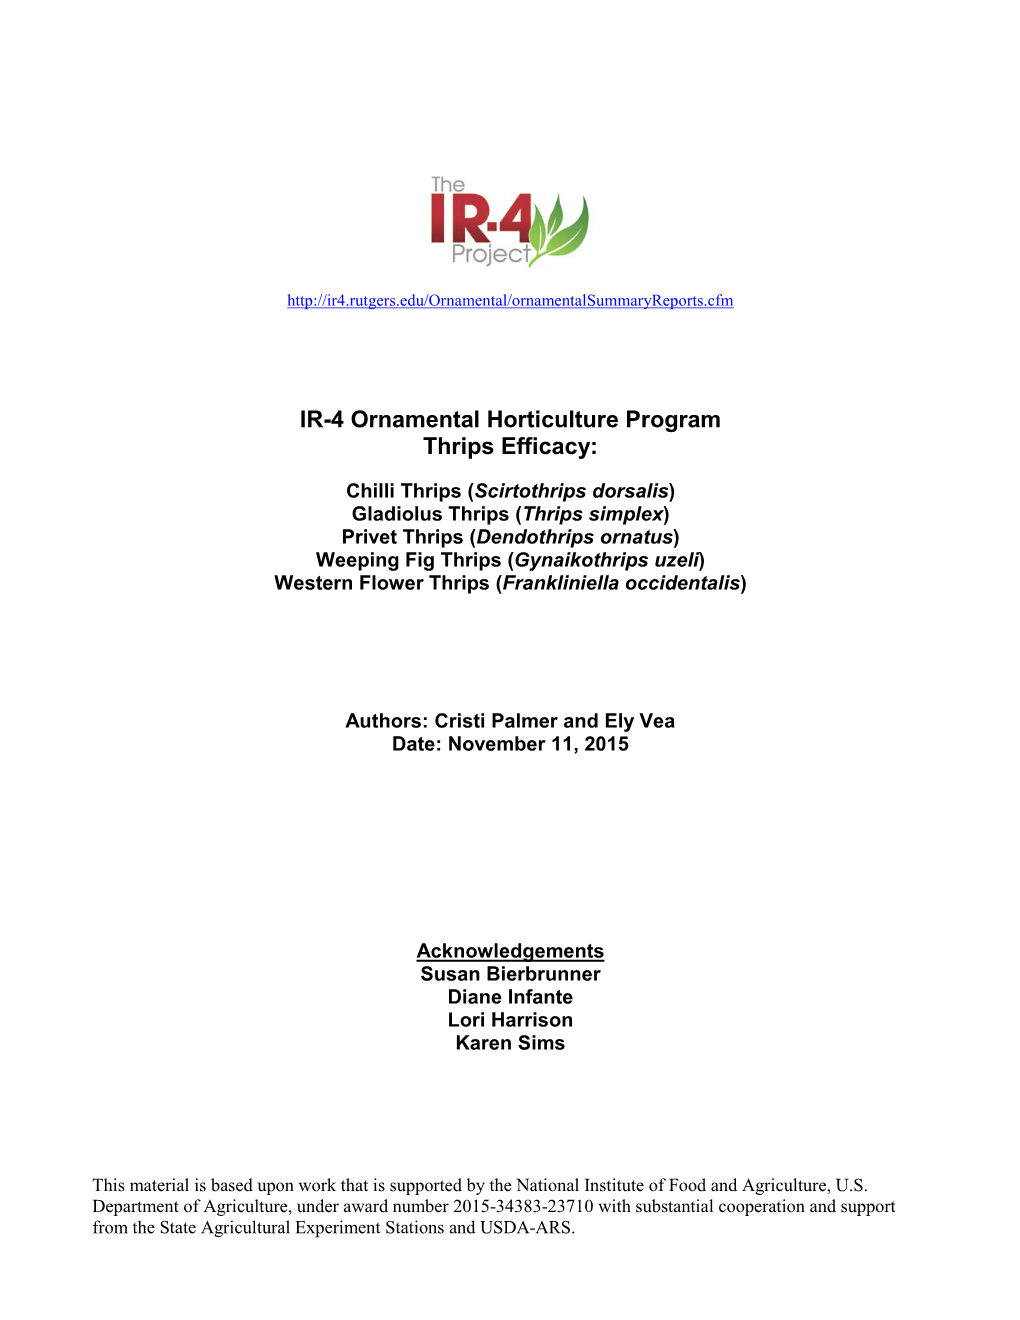 IR-4 Ornamental Horticulture Program Thrips Efficacy